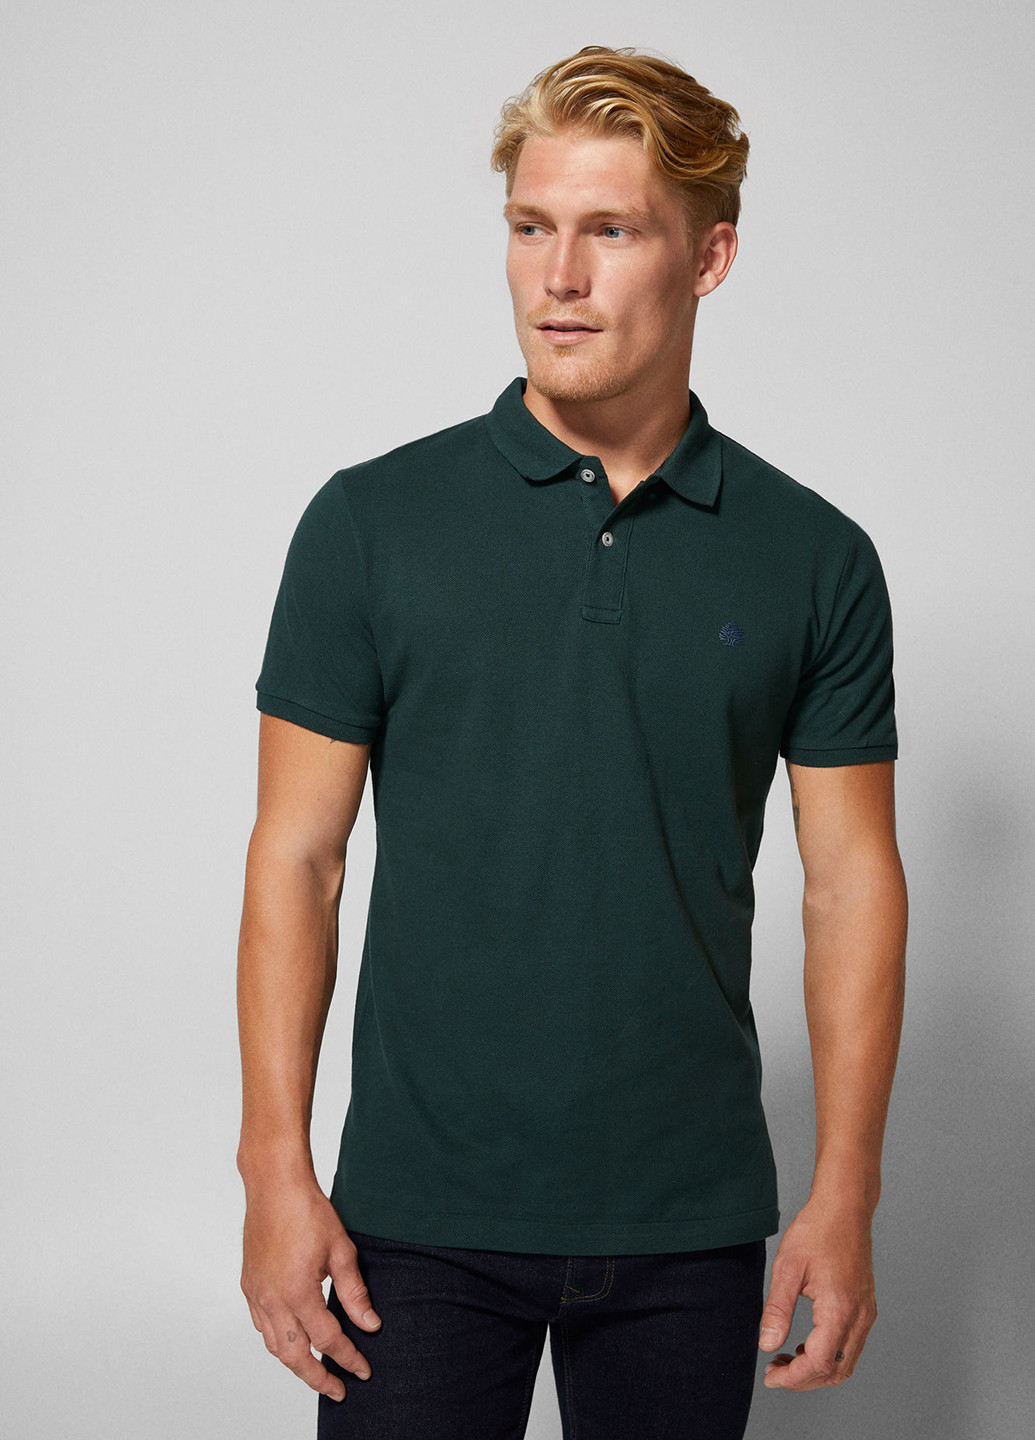 Зеленая футболка-поло для мужчин Springfield однотонная